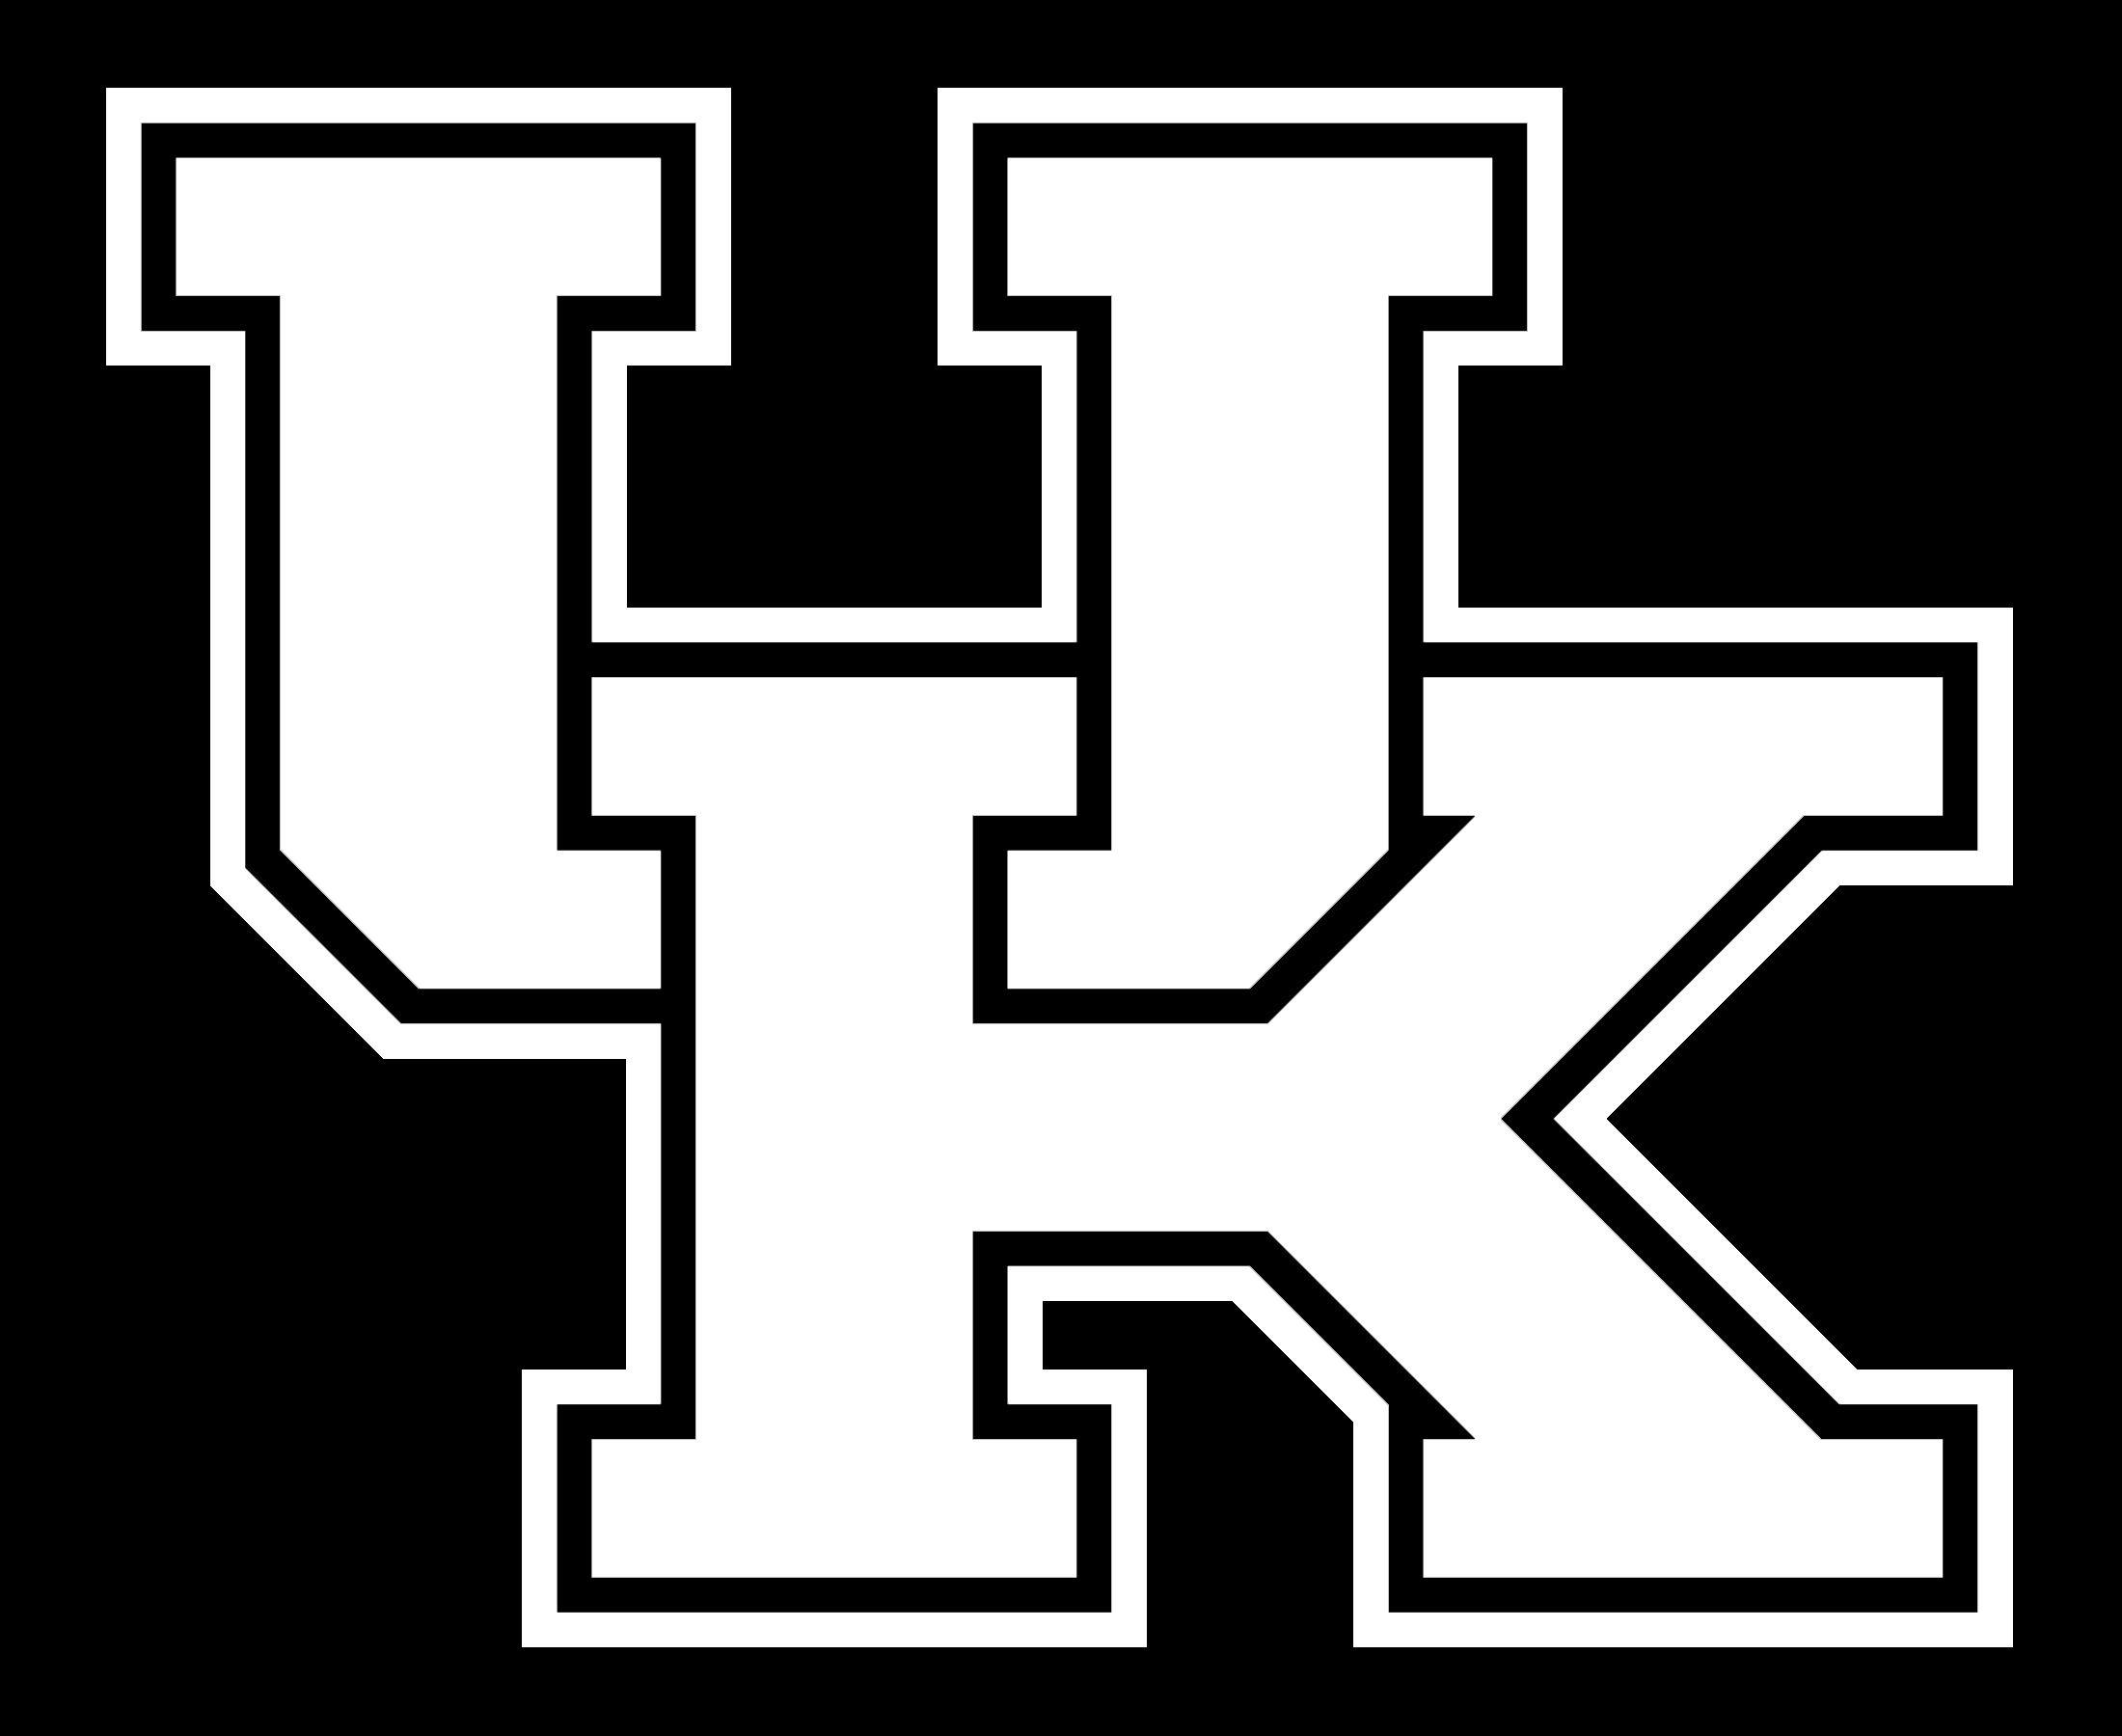 U of K Logo - University of Kentucky Logo, University of Kentucky Symbol, Meaning ...